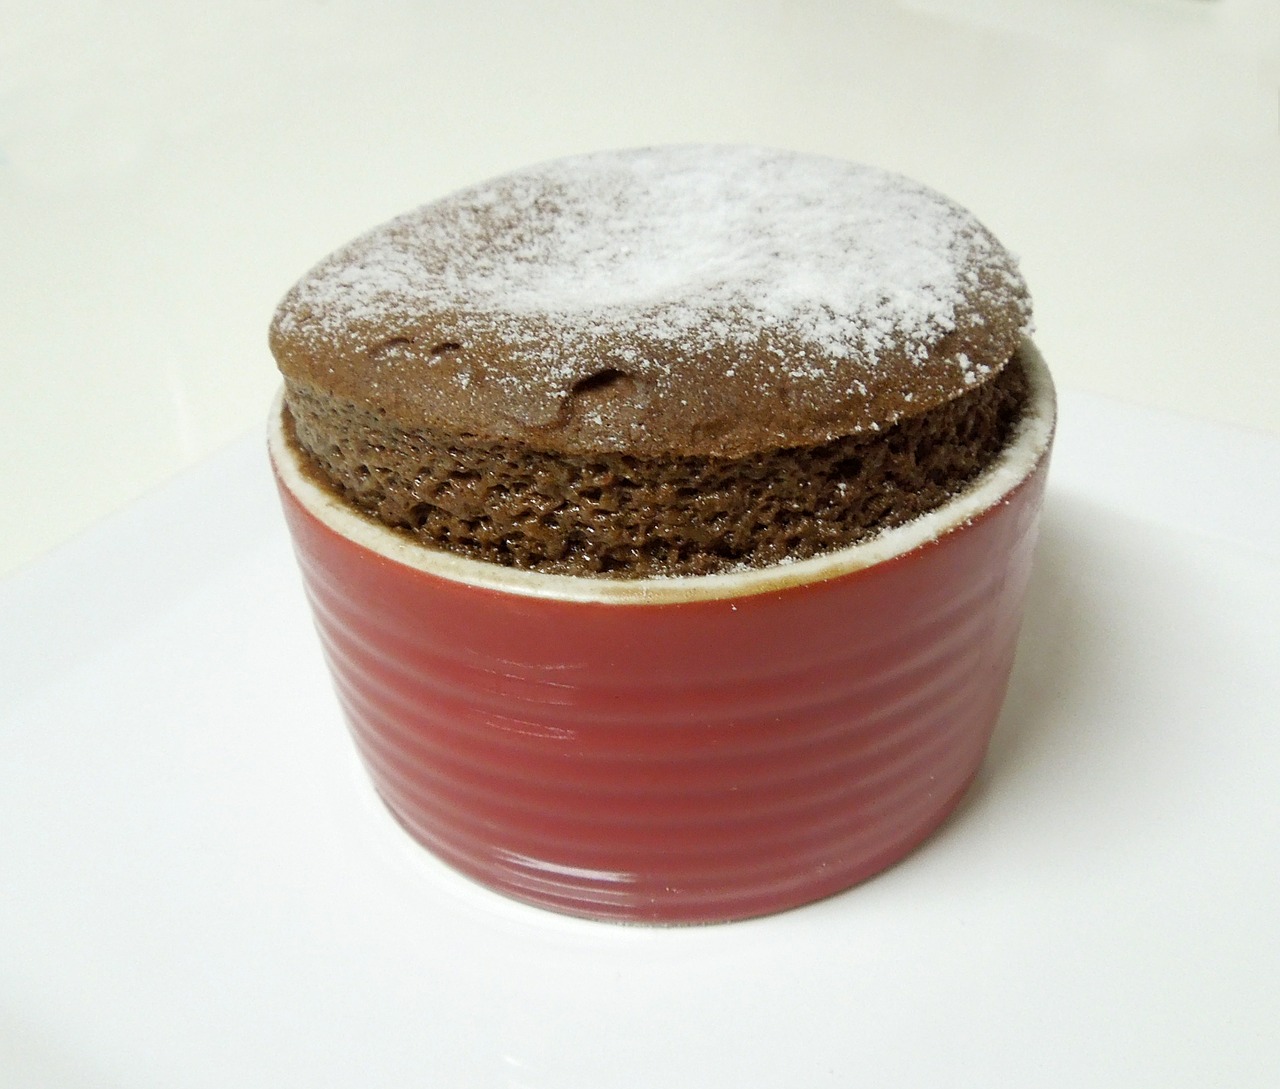 Passover Chocolate Souffle Cake